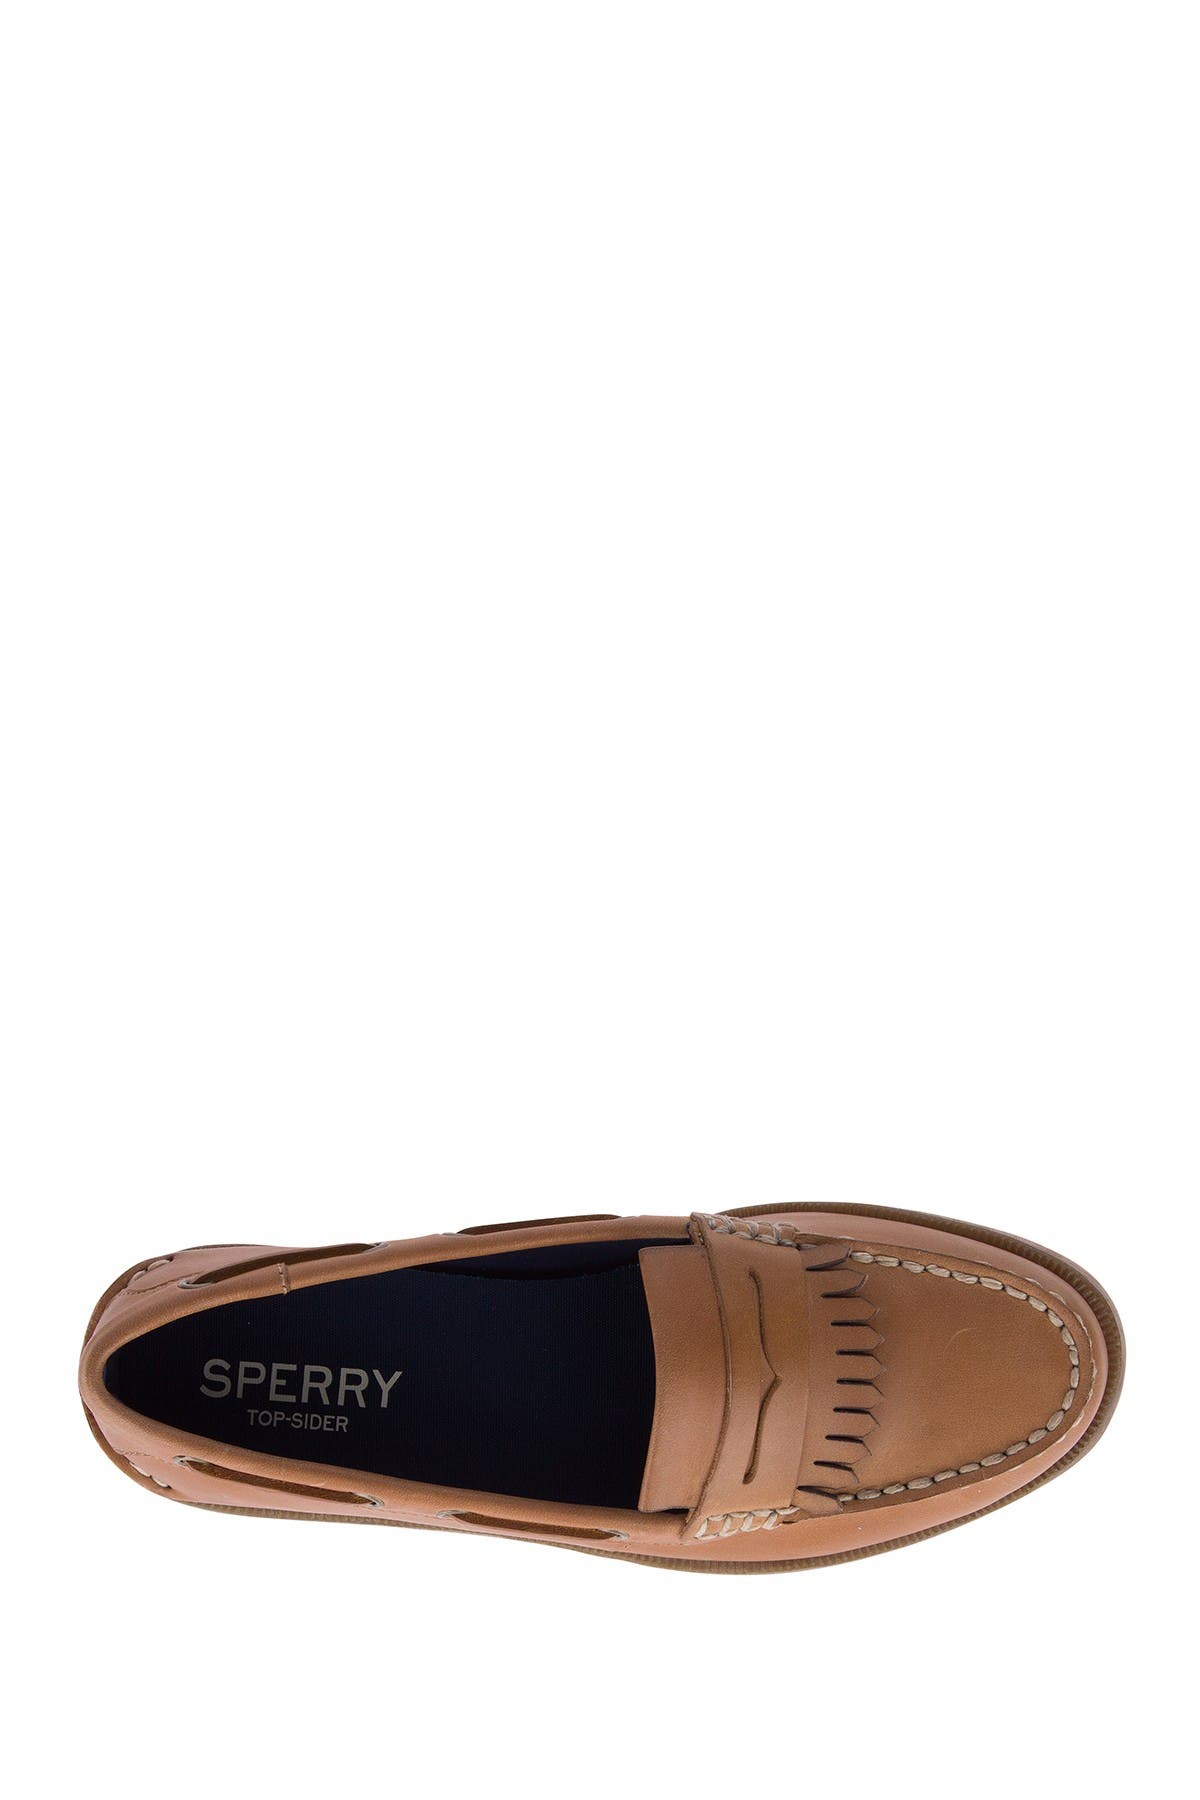 sperry kiltie loafers